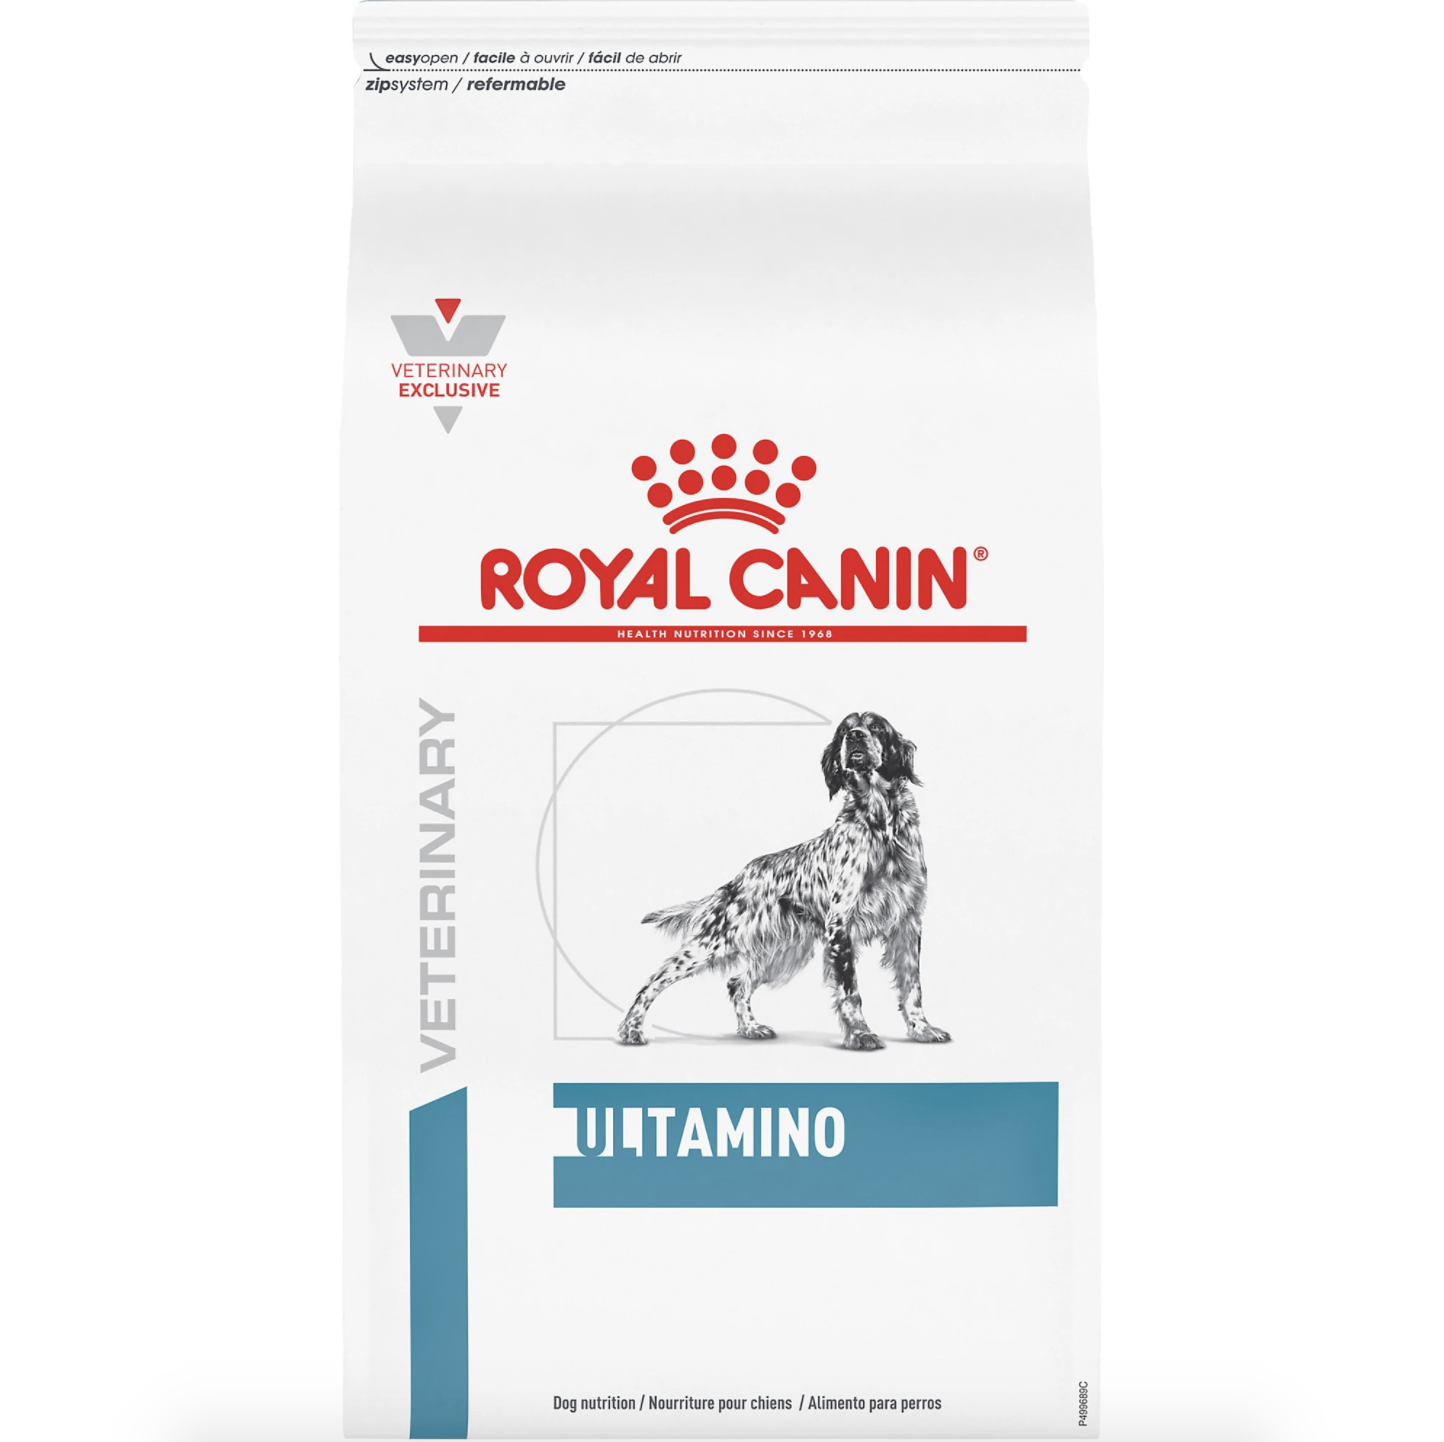 Royal Canin Veterinary Diet Canine Ultamino dry dog food